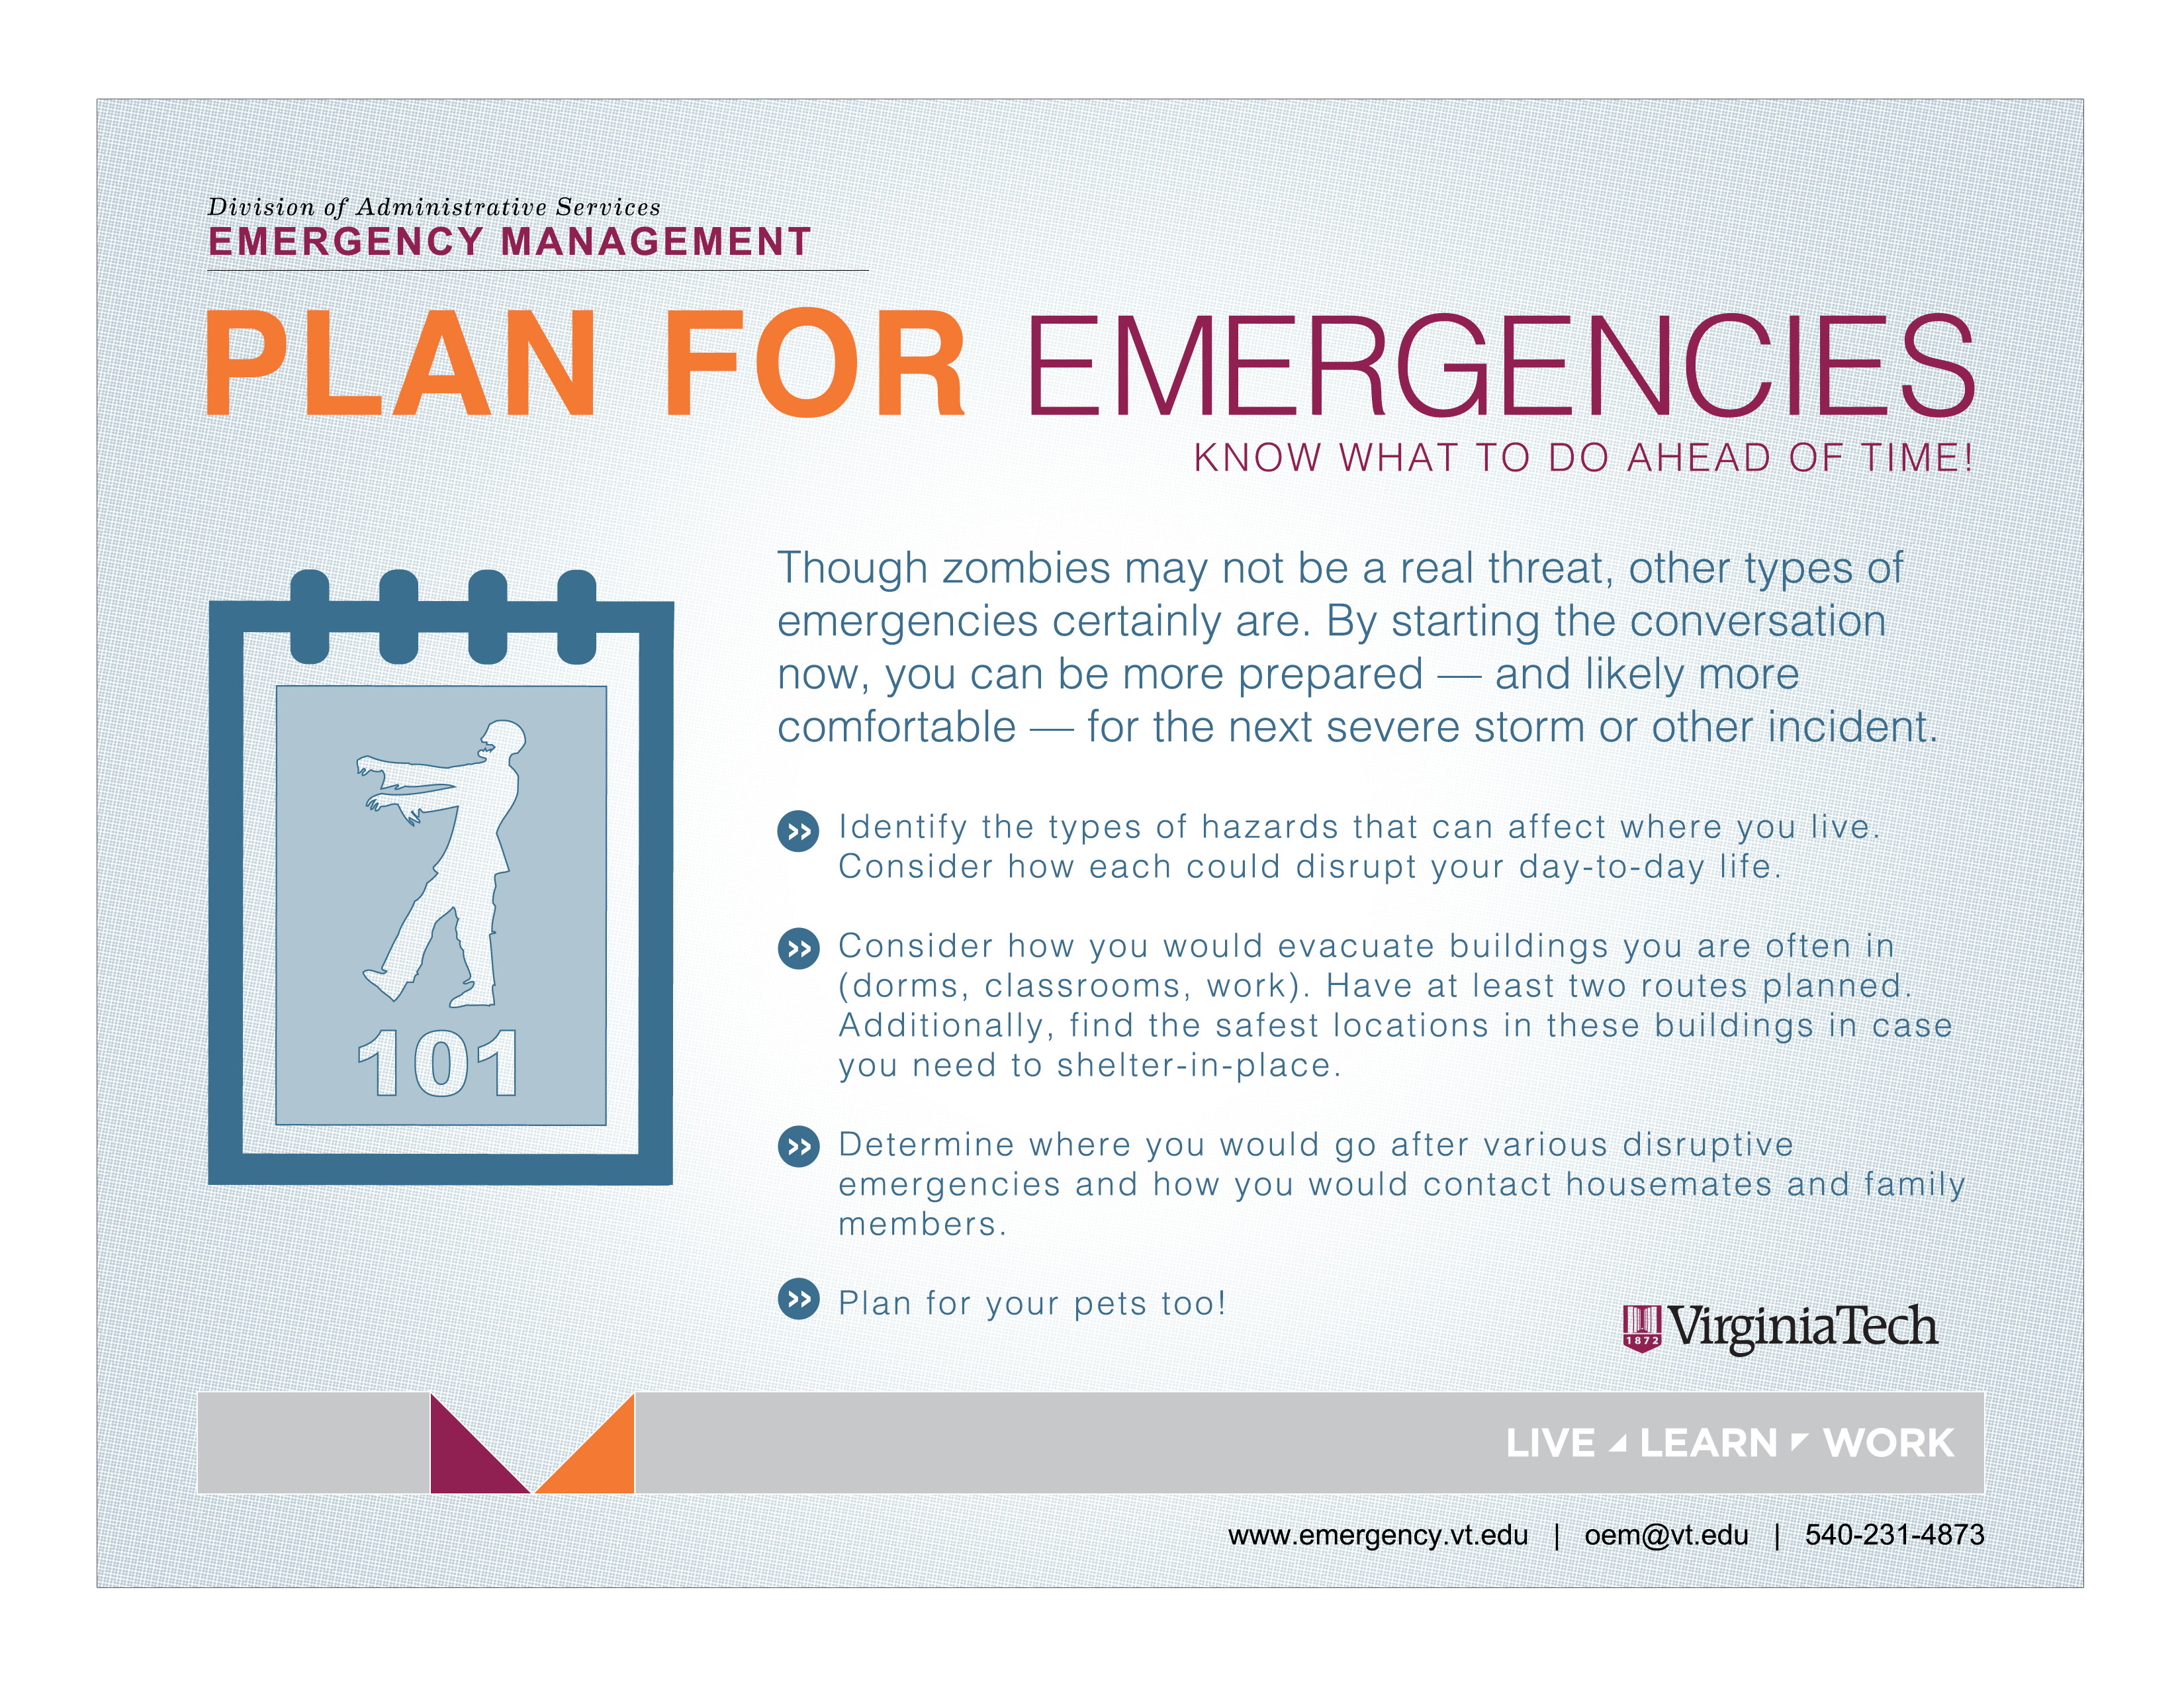 preparedness-toolkit-emergency-management-virginia-tech